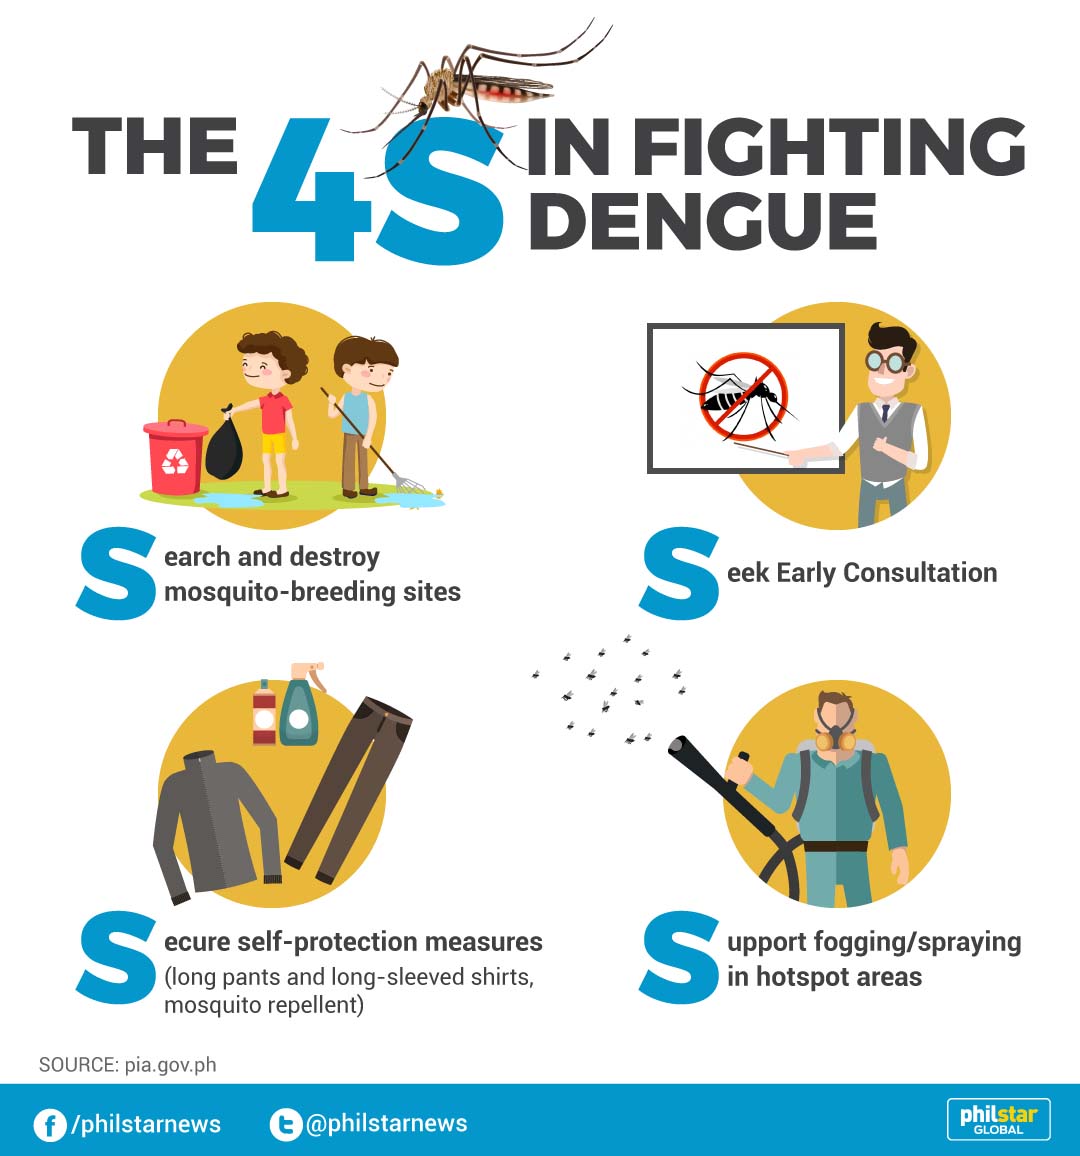 Dengue Prevention Poster